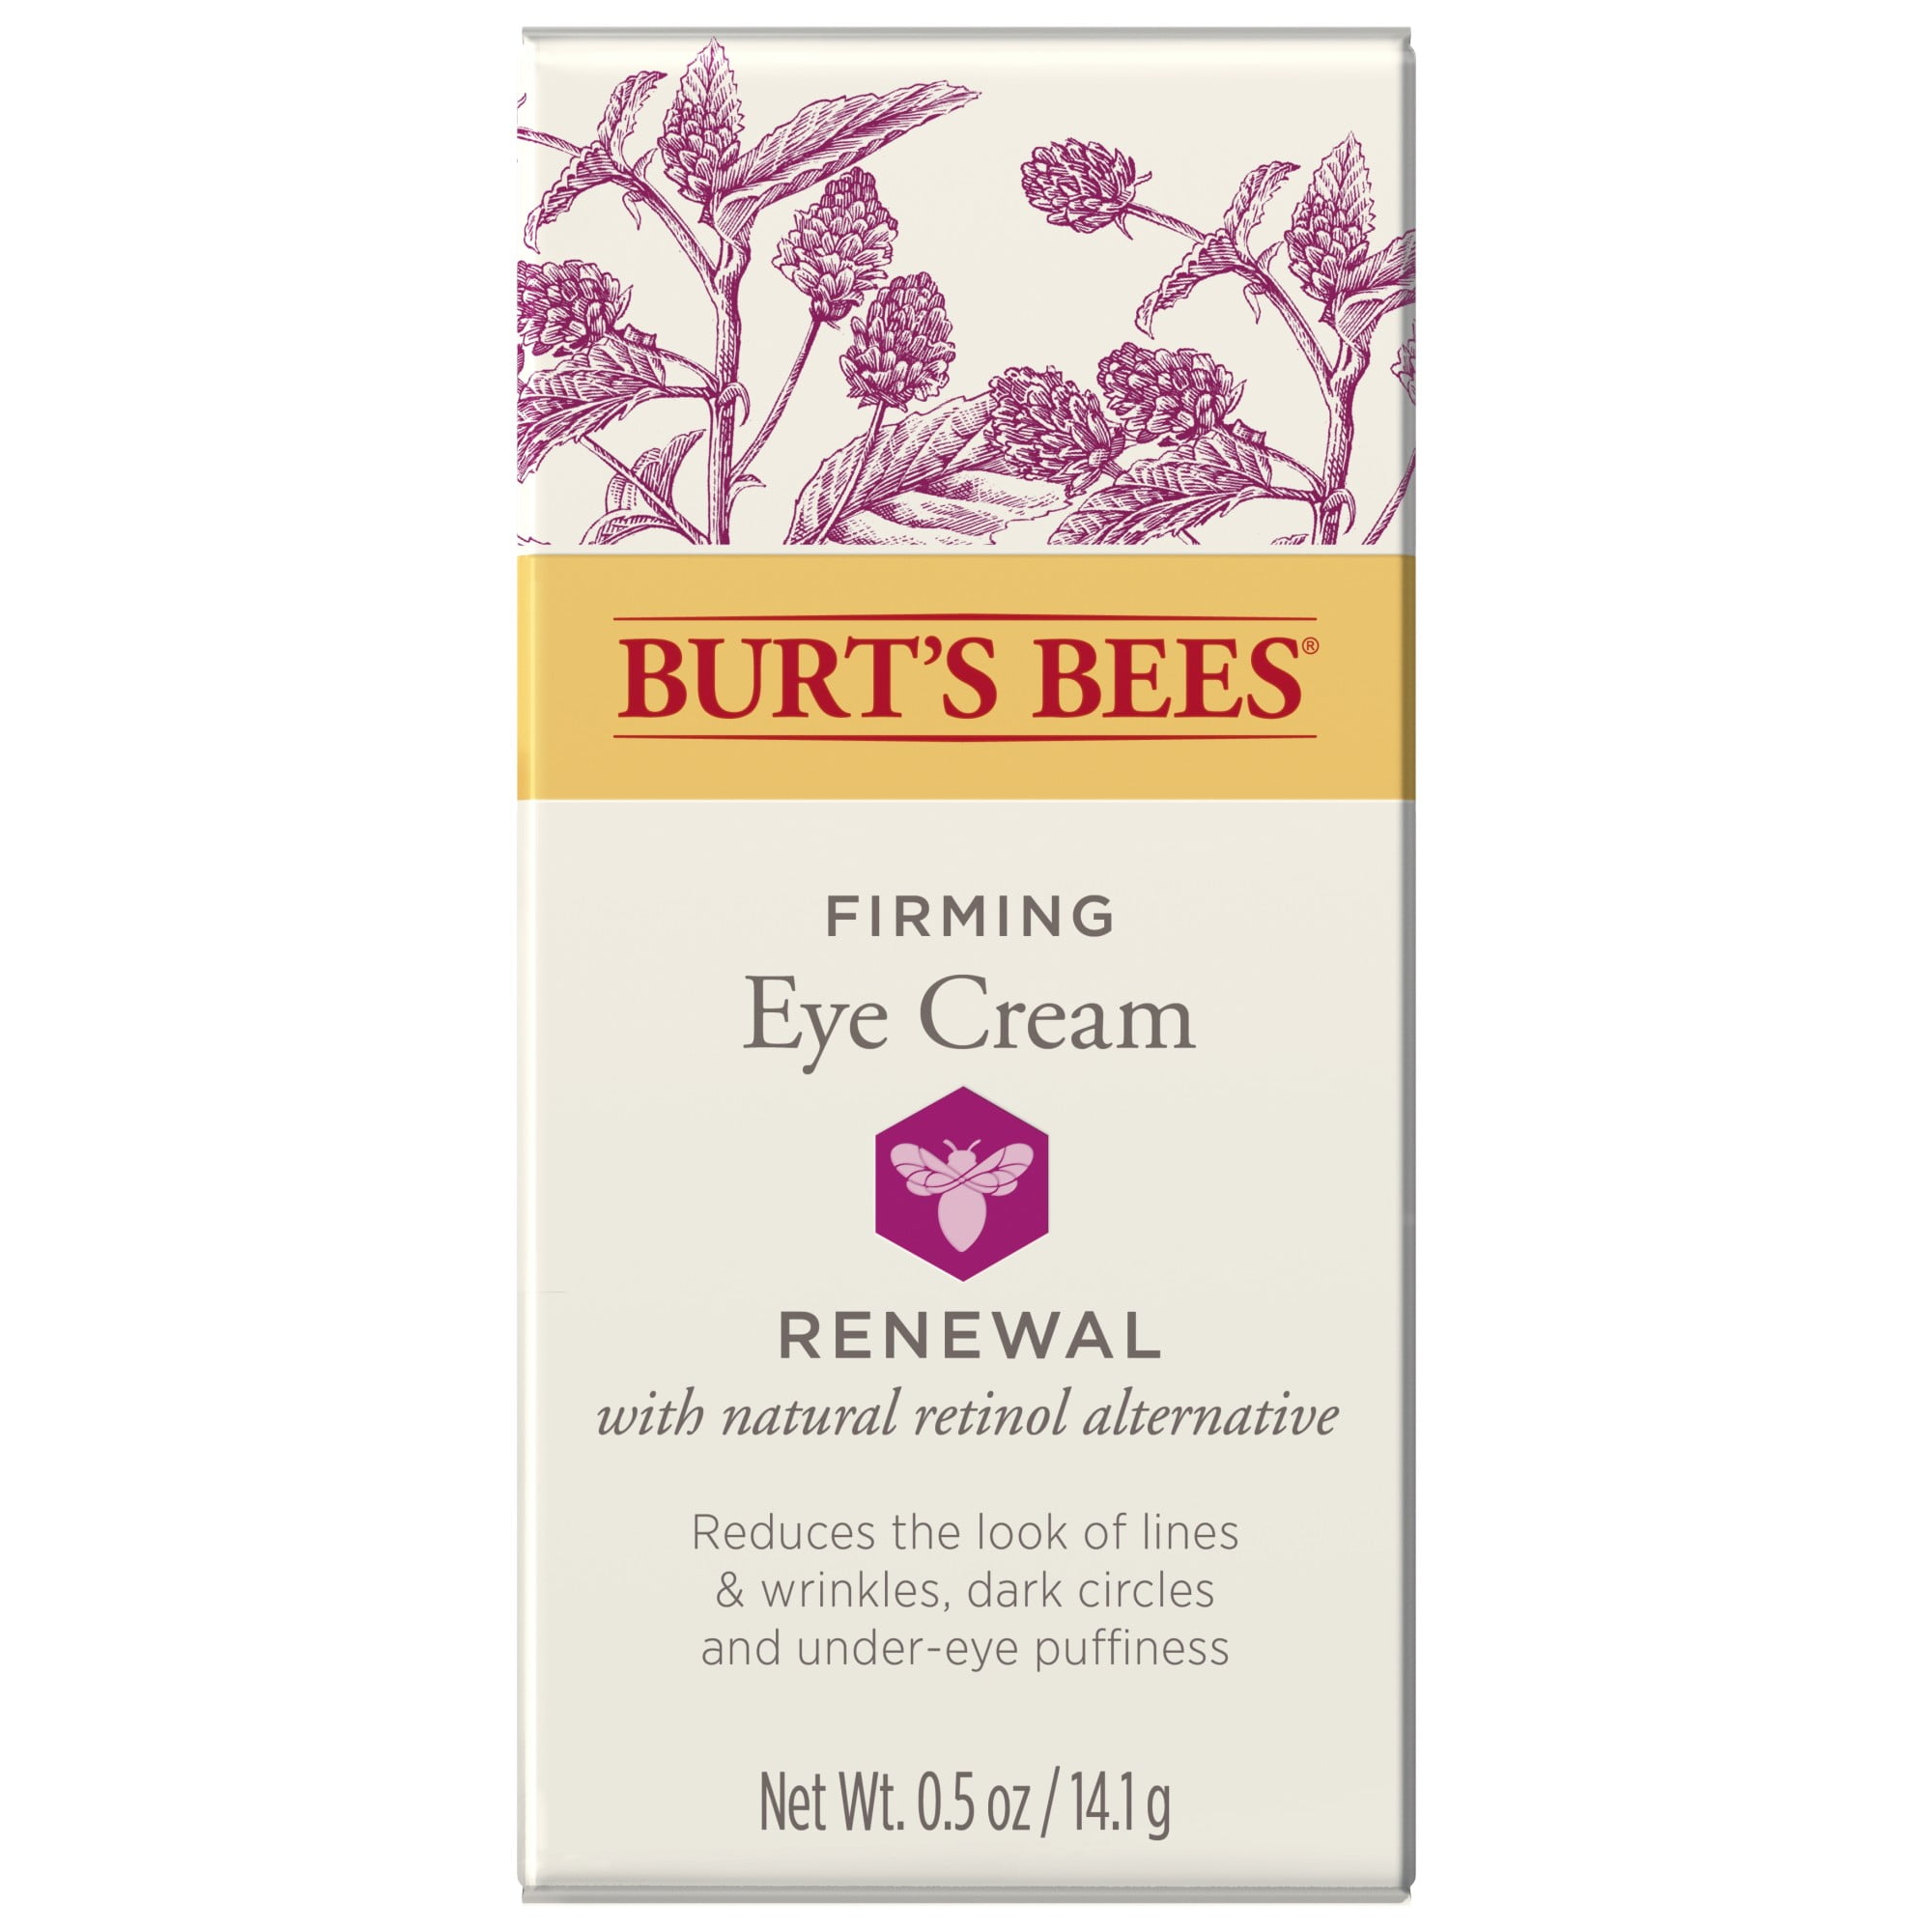 Burt's Bees Renewal Firming Eye Cream, 0.5 oz